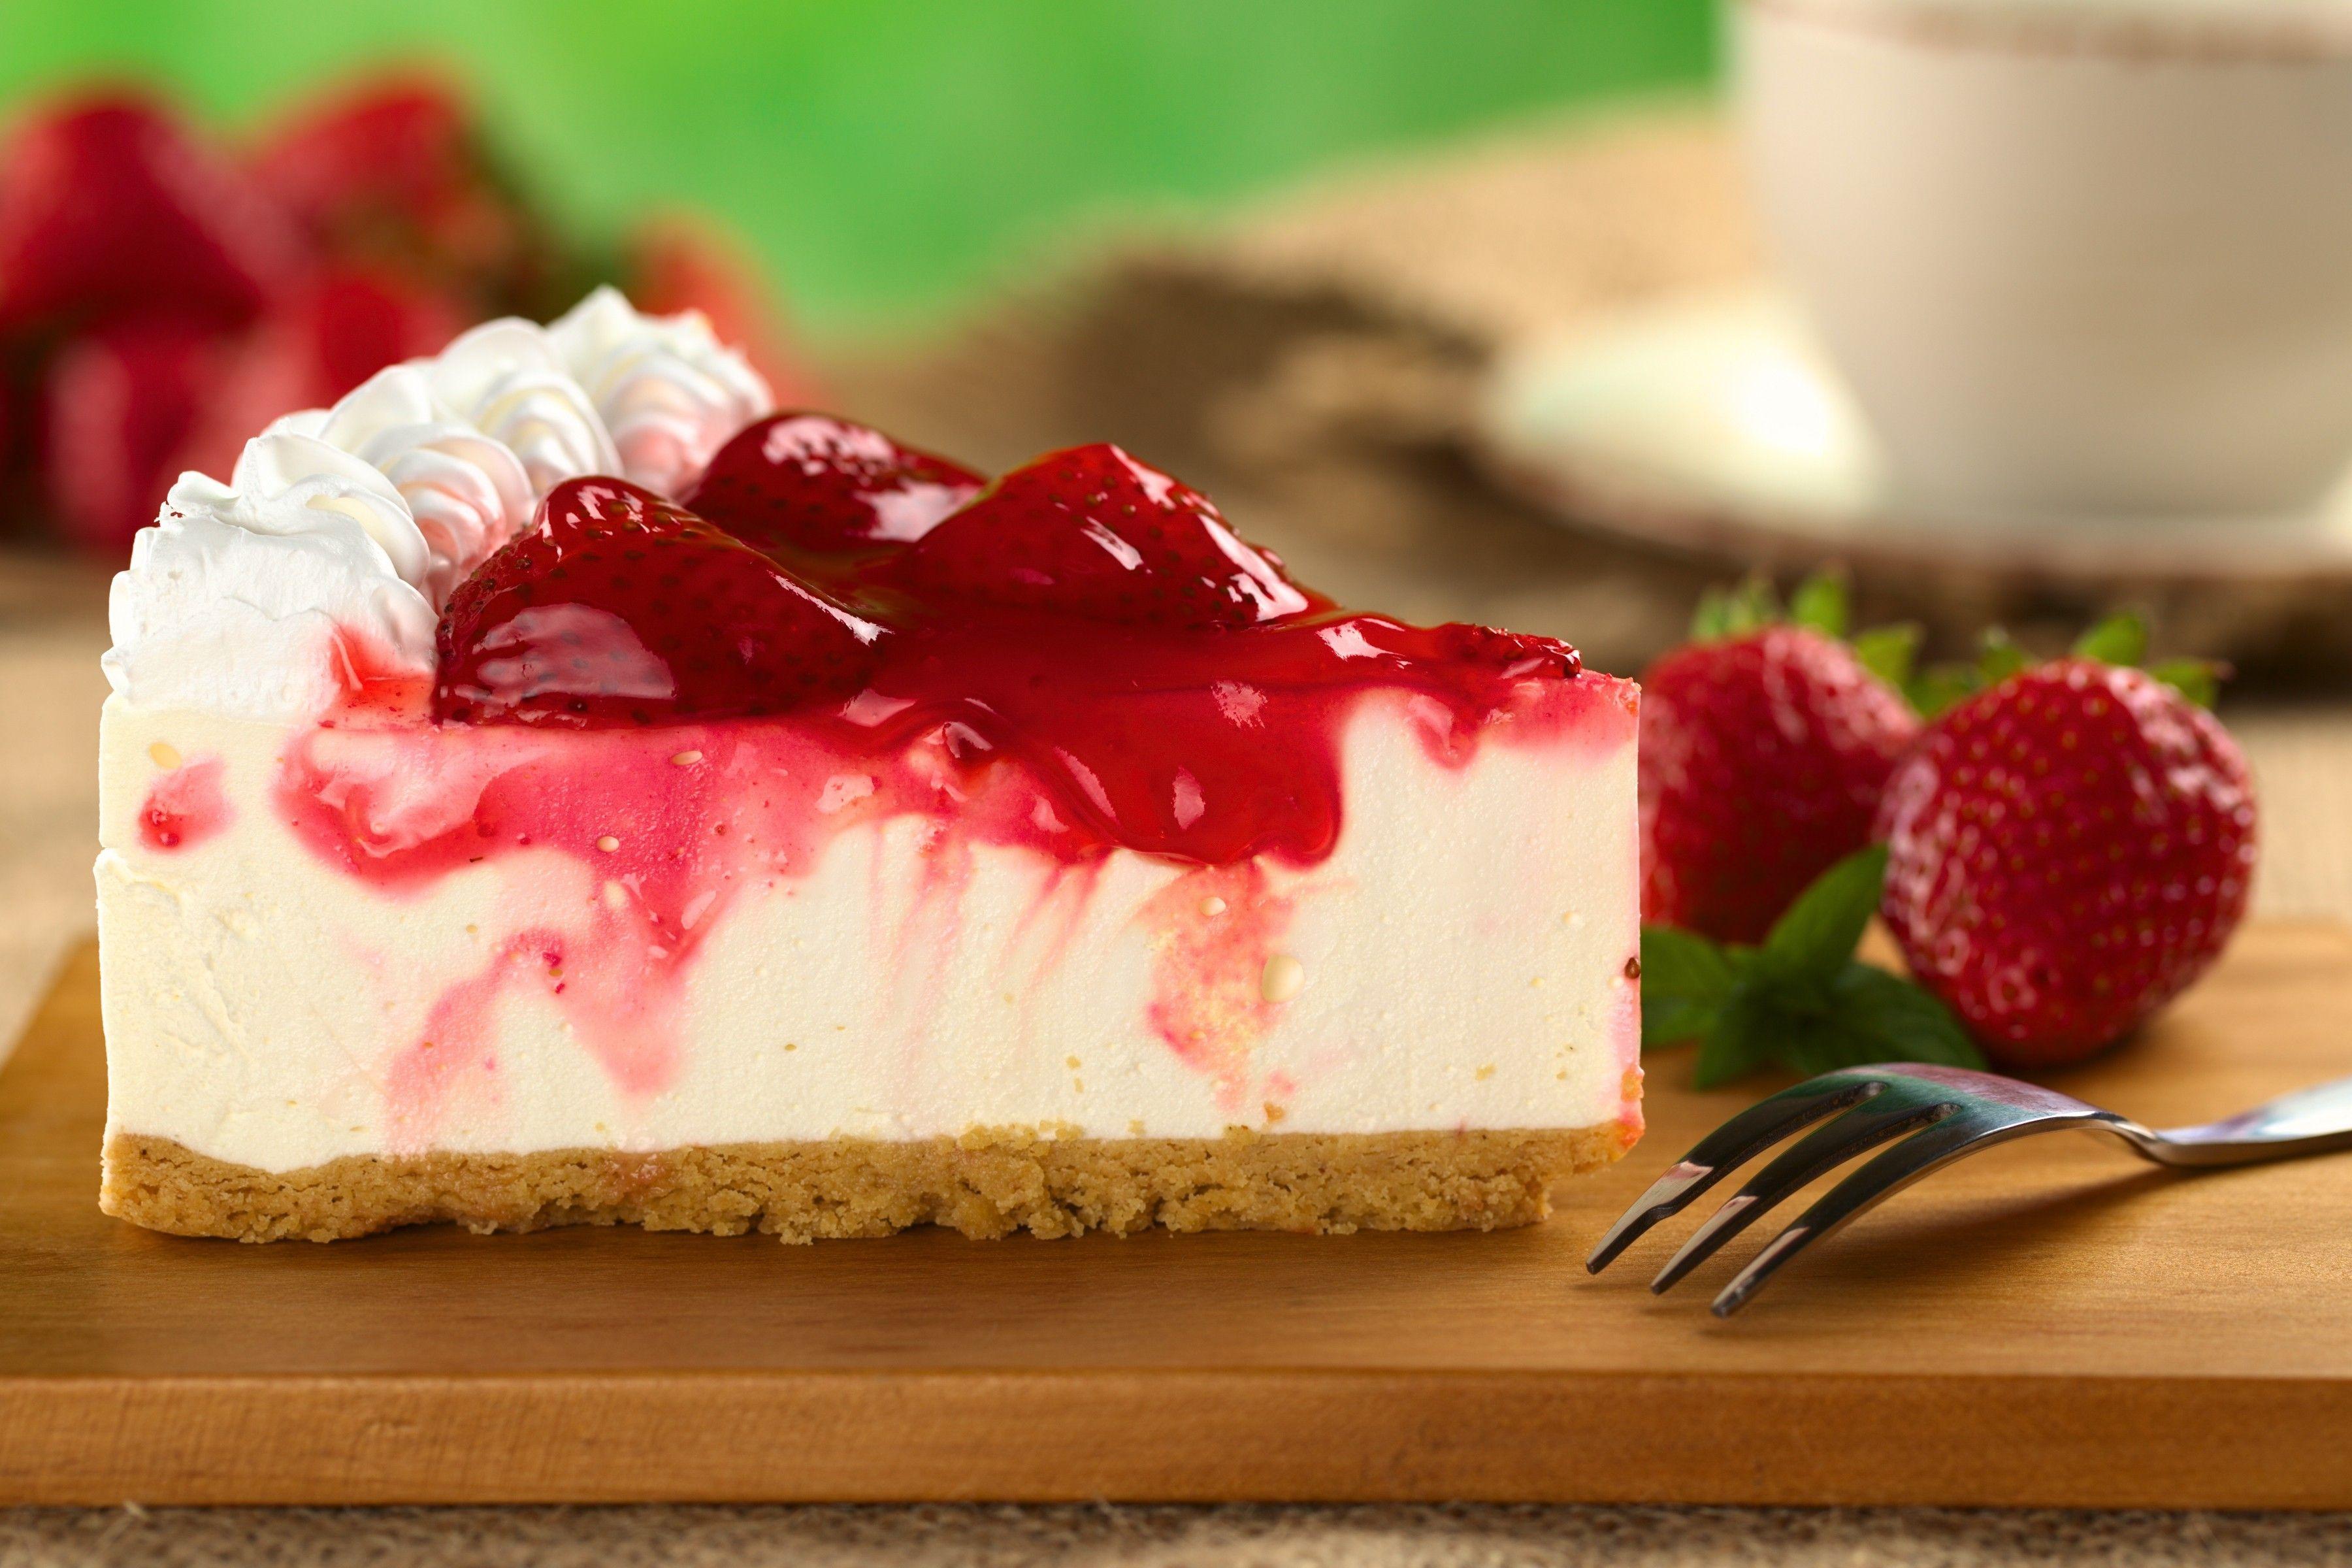 Wonderful Strawberry Cheesecake Wallpaper 43257 3600x2400 px